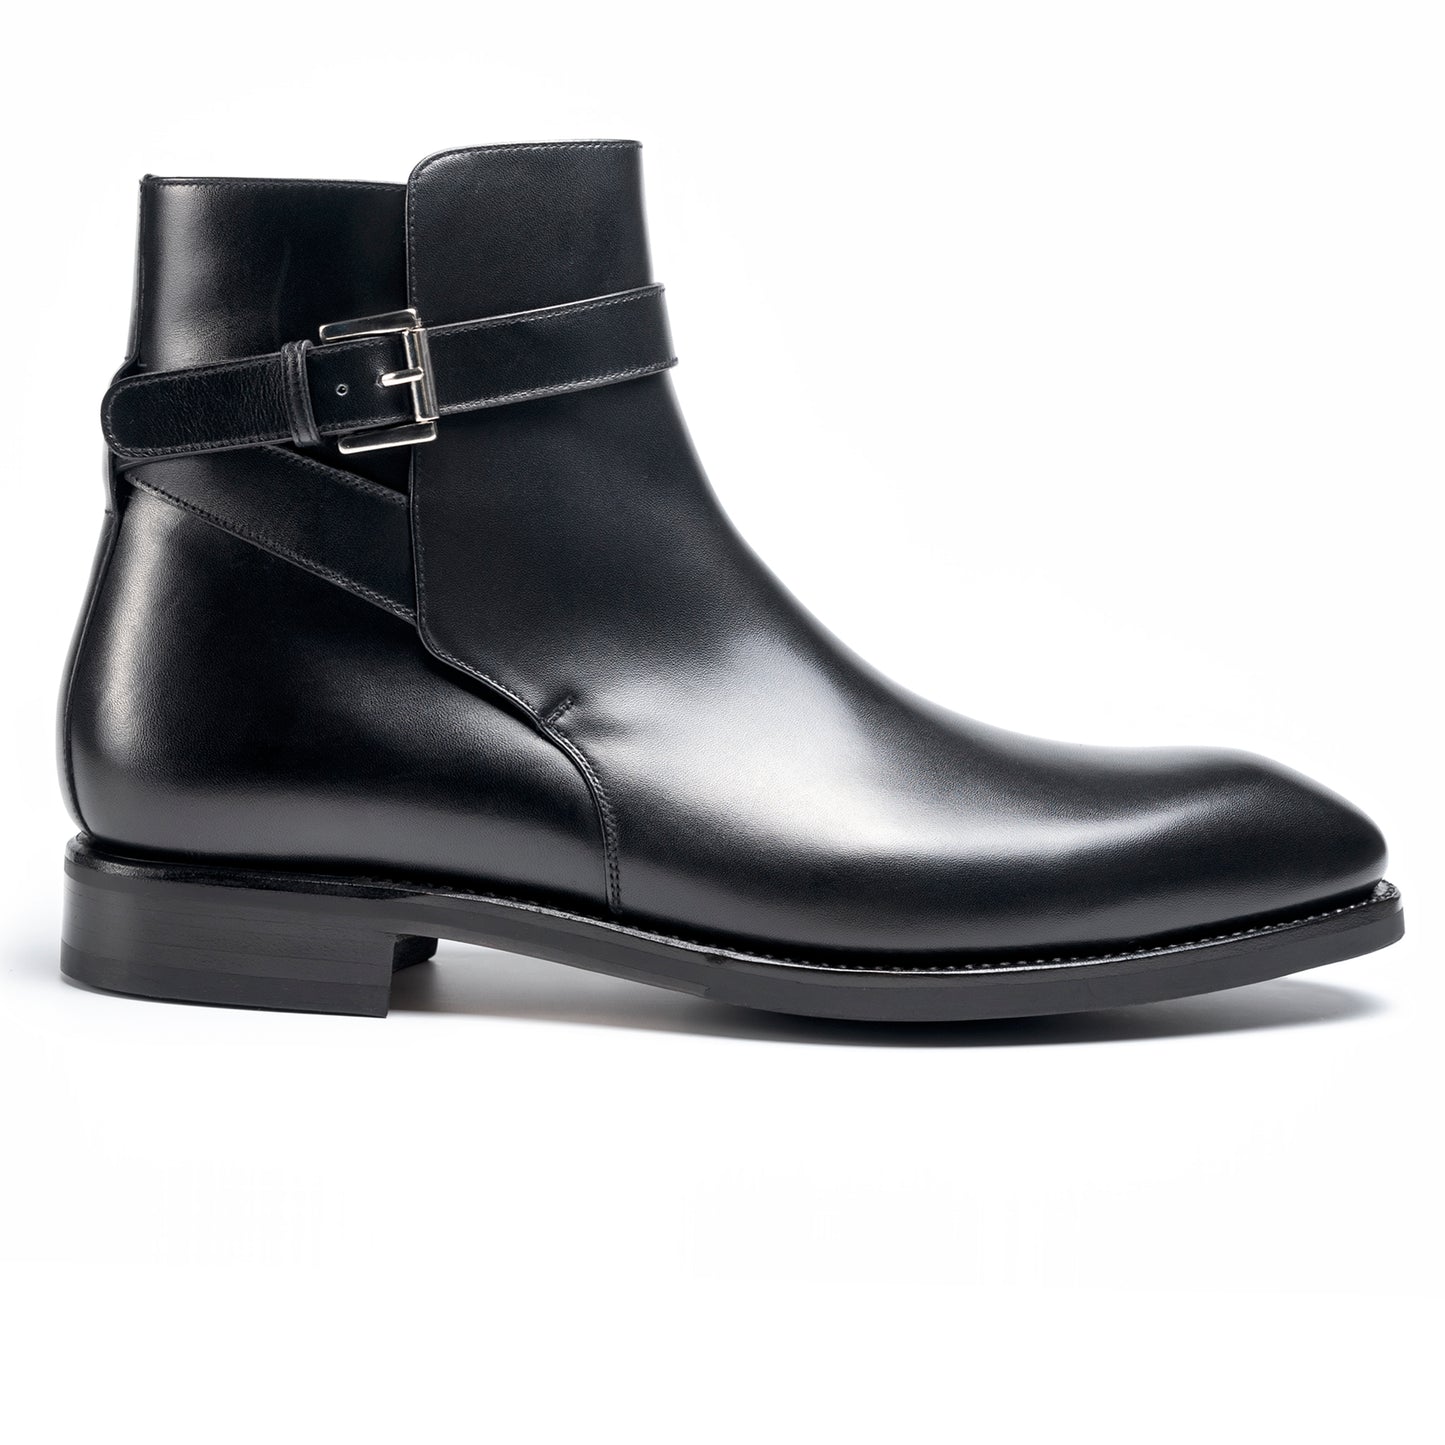 TLB Mallorca leather shoes 513 / ALAN / BOXCALF BLACK